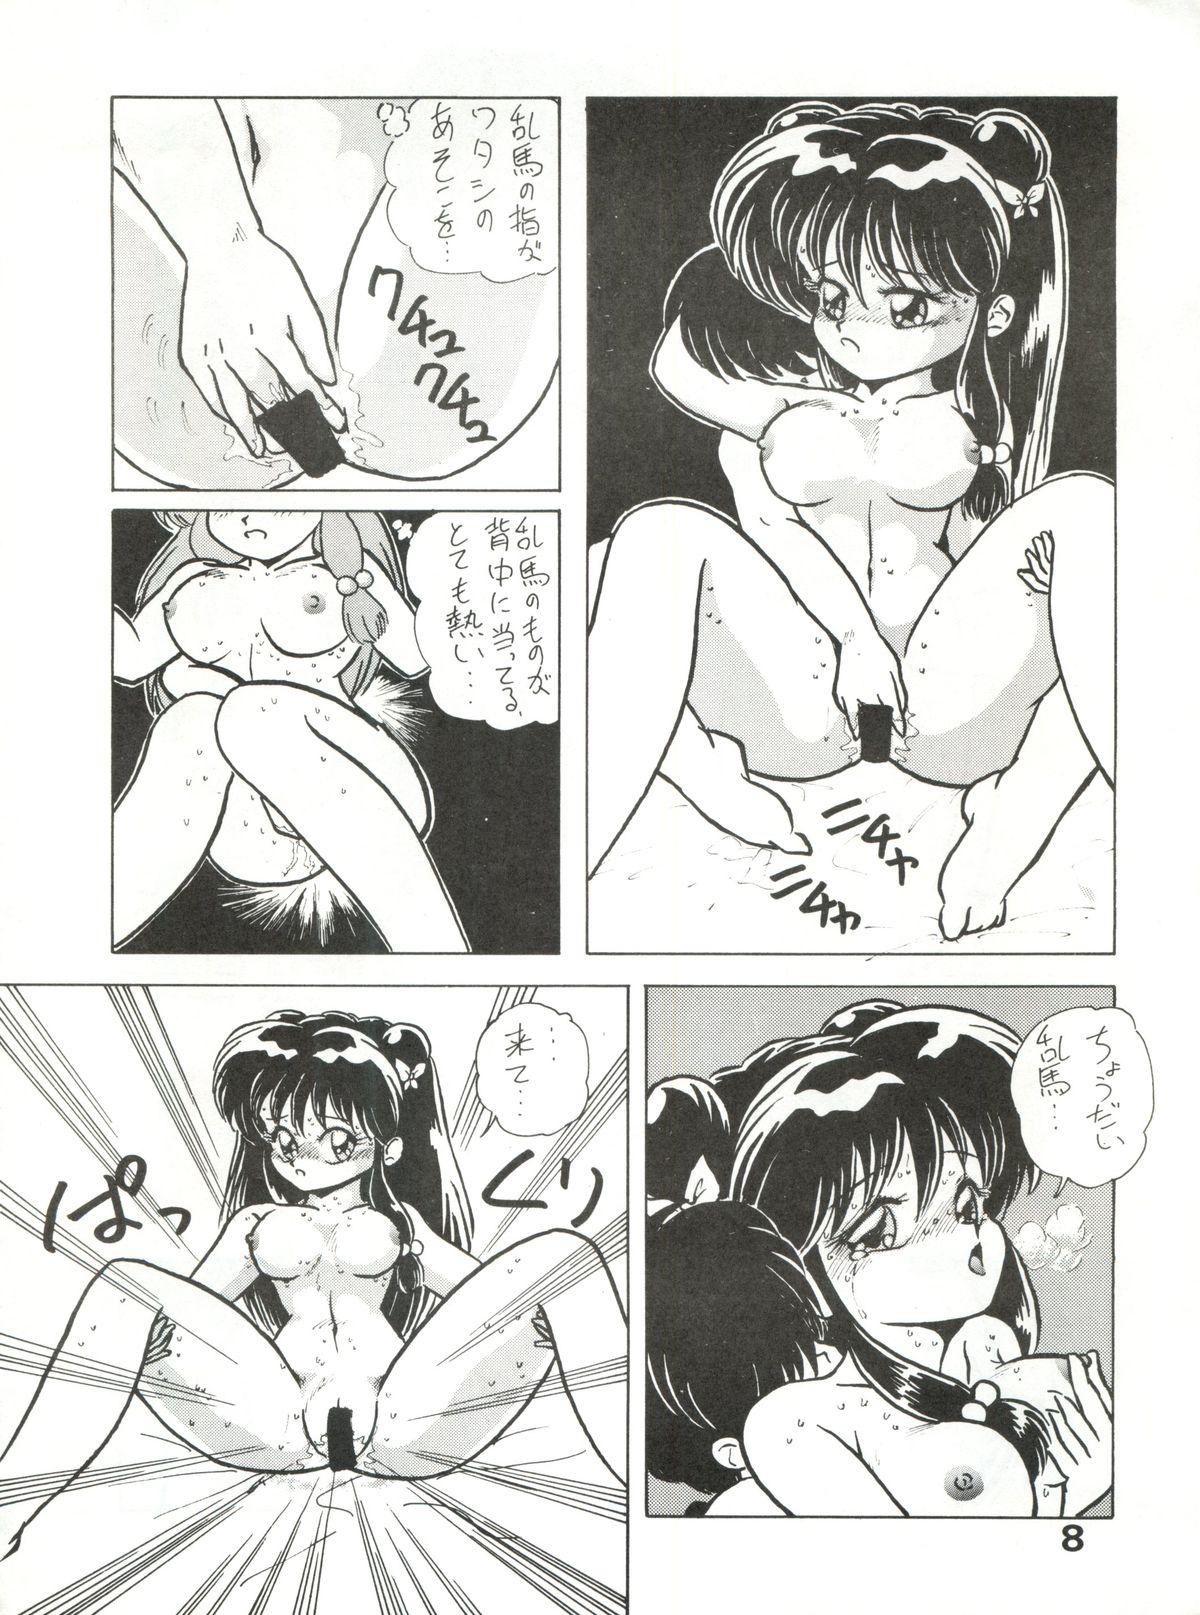 Porno Zubizu Bat - Sailor moon Ranma 12 3x3 eyes Les - Page 8